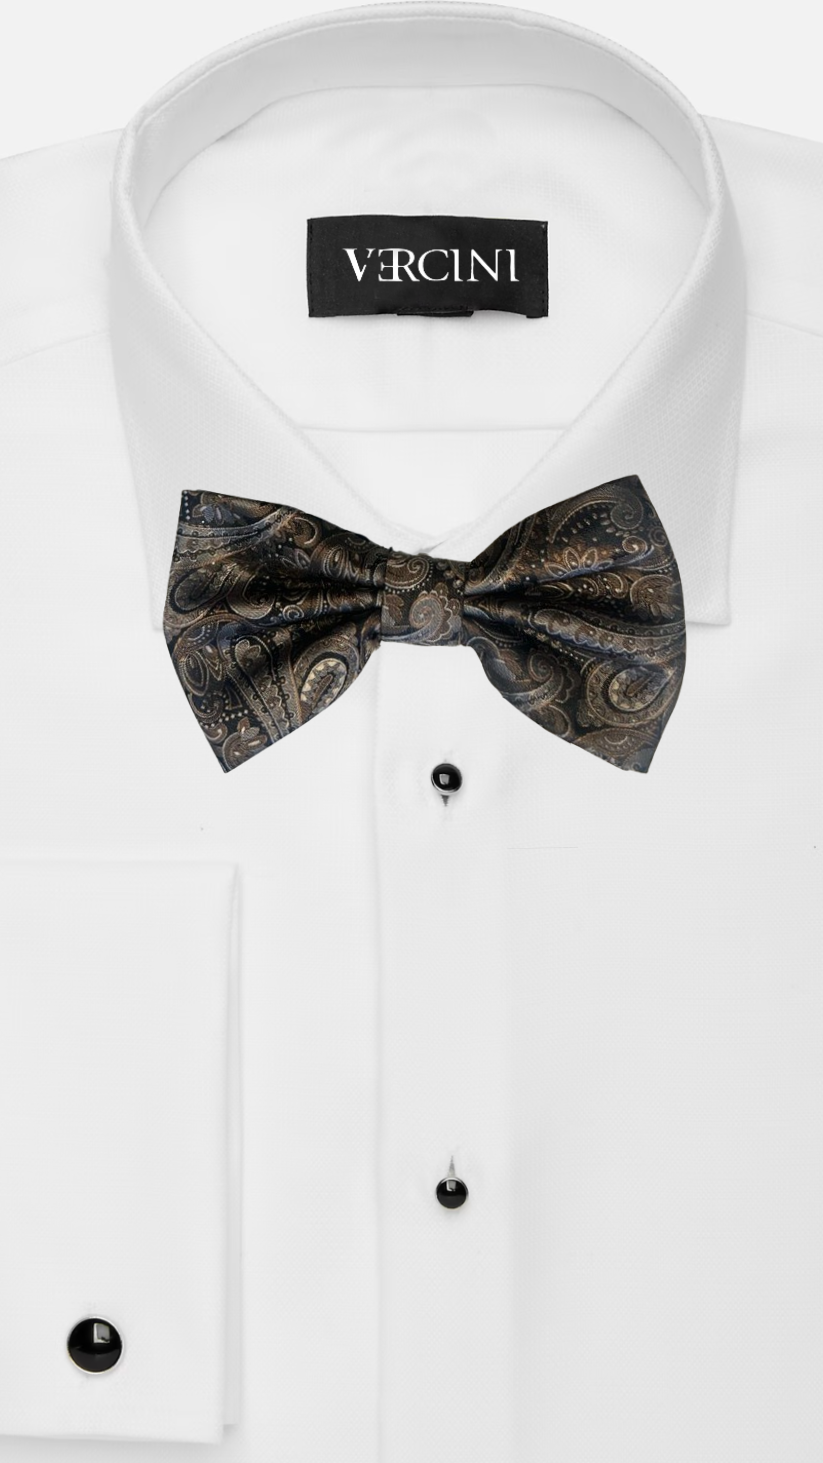 Regular bow ties